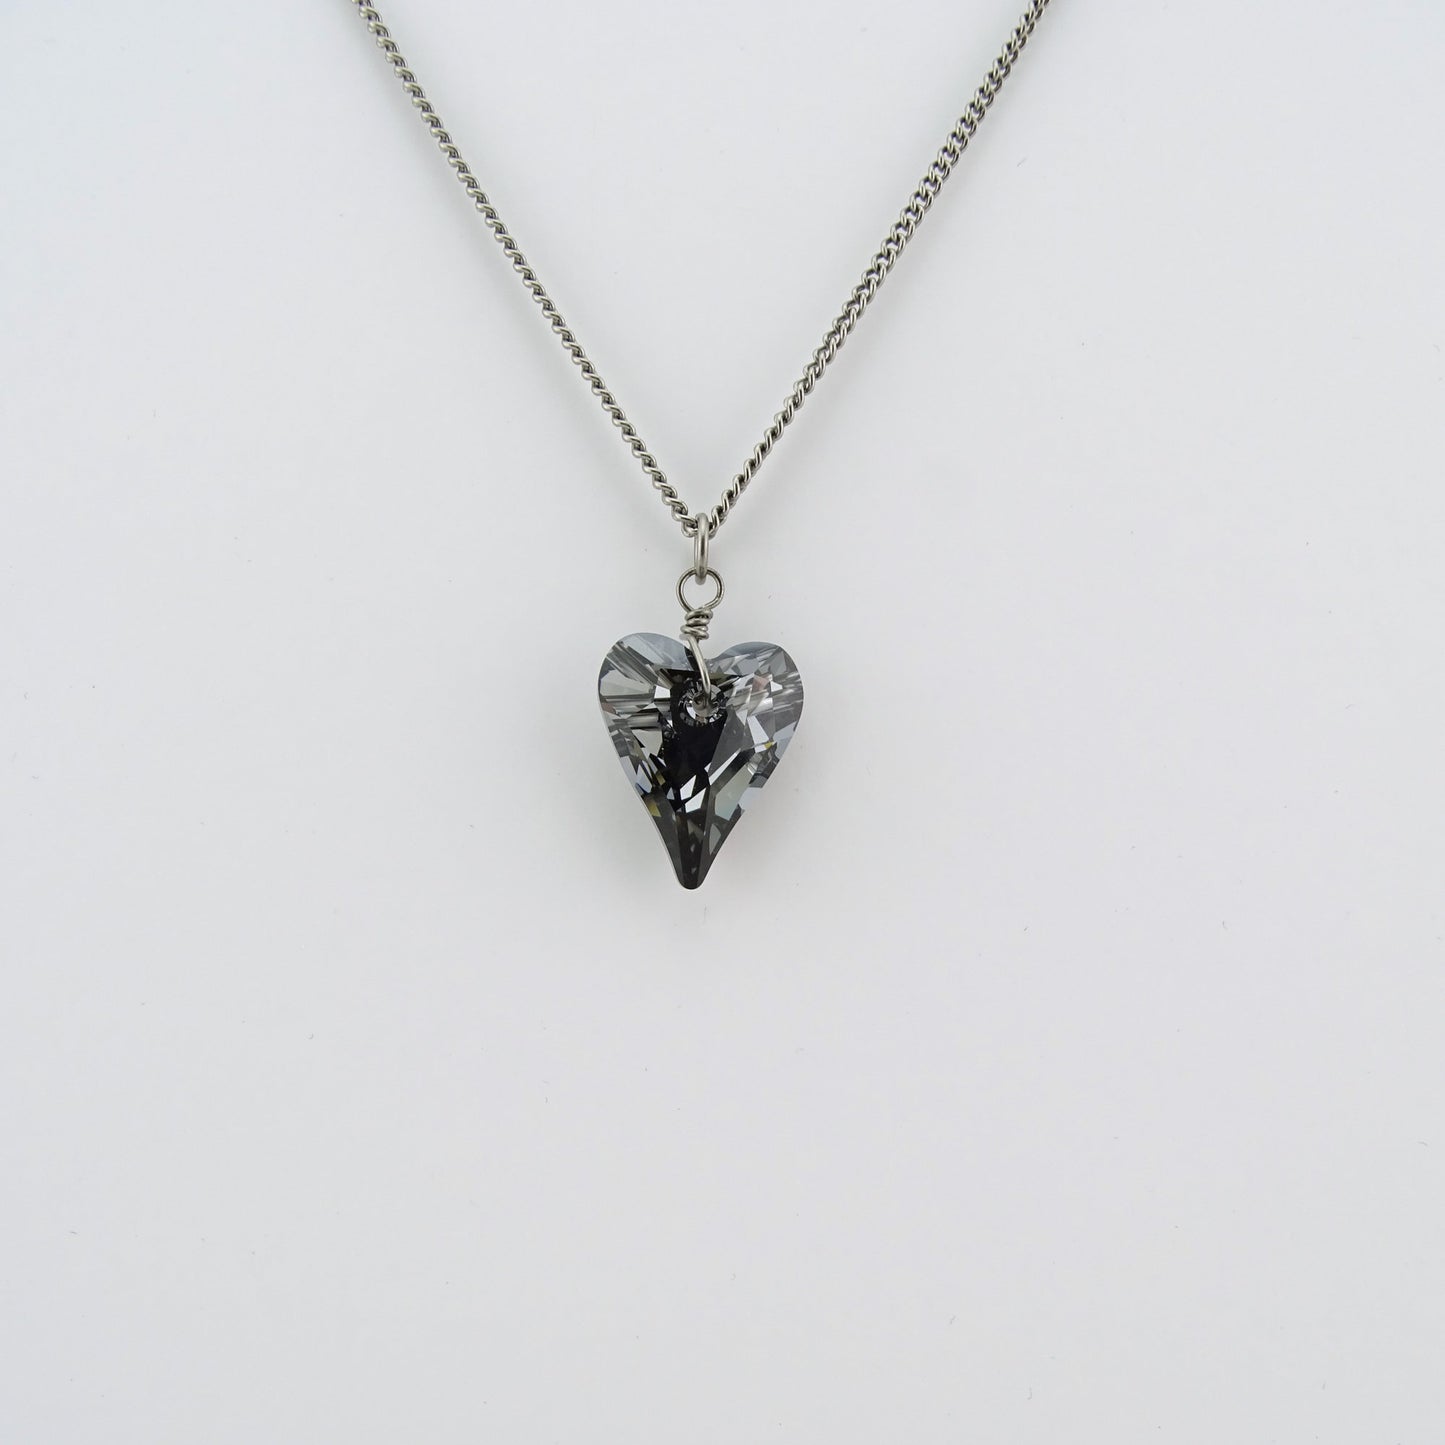 Silver Night Heart Titanium Necklace, Niobium Wire Wrapped Swarovski Crystal, Hypoallergenic Nickel Free Necklace For Sensitive Skin